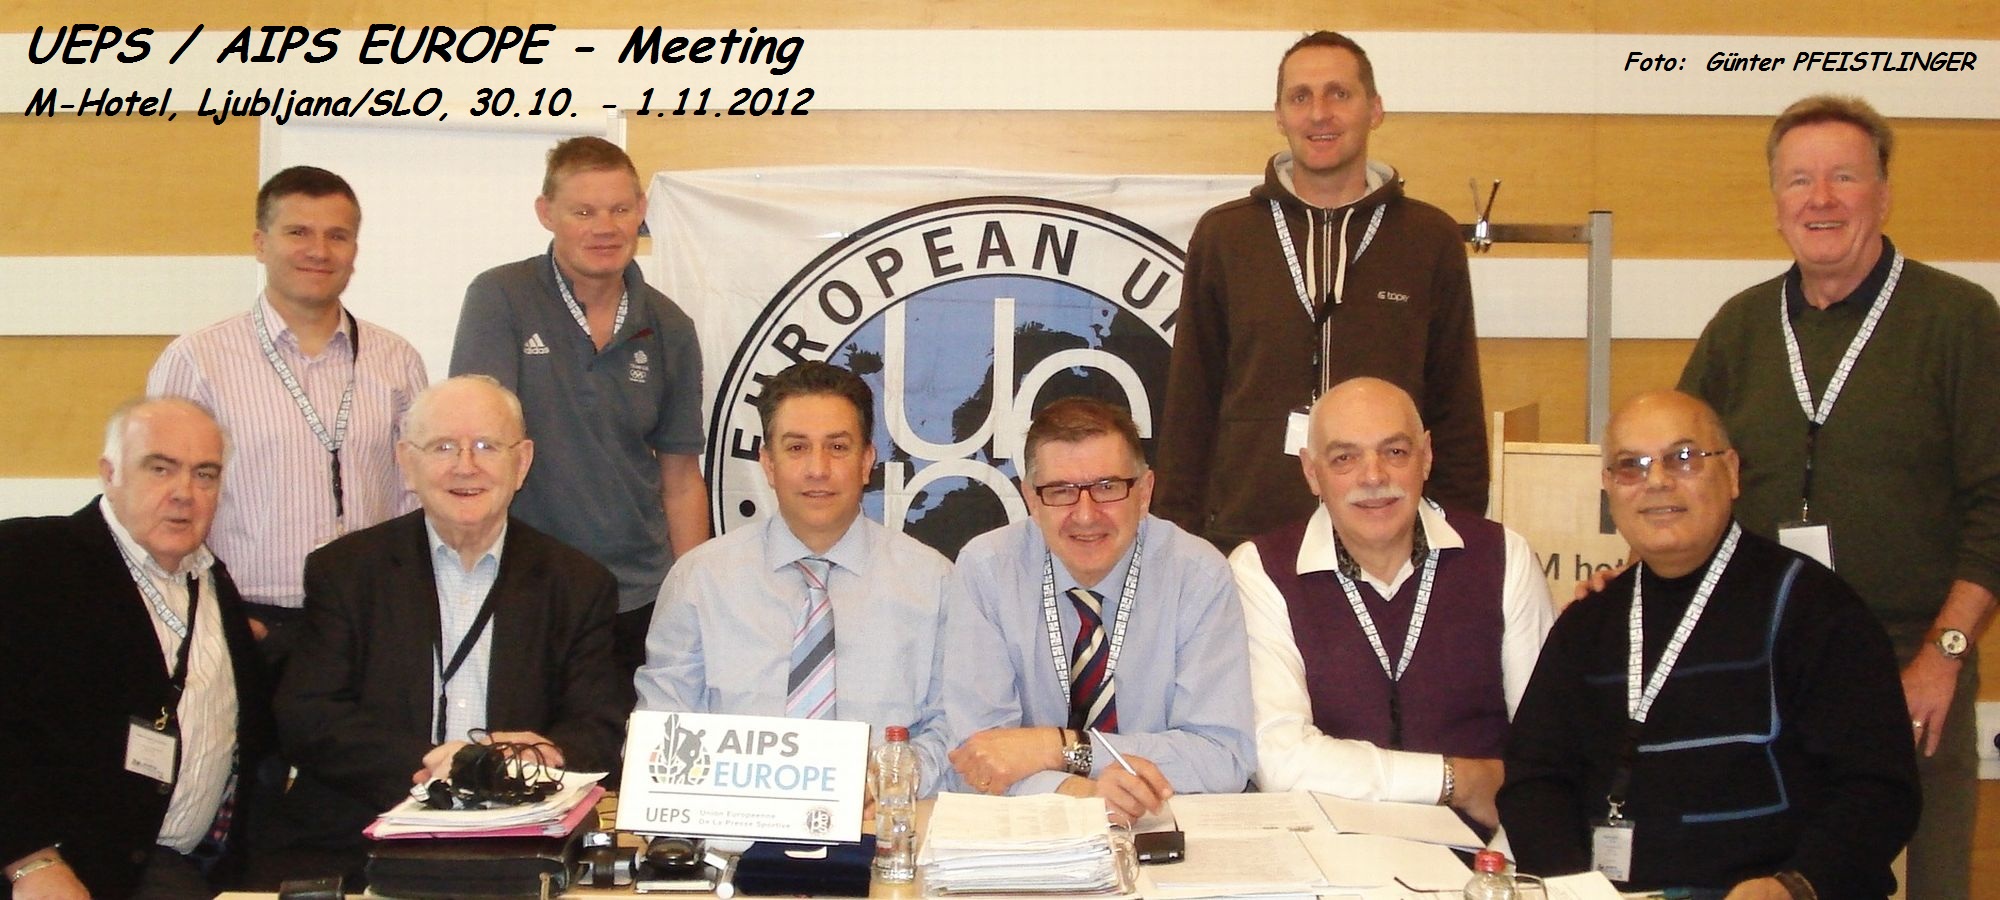 UEPS-AIPS Europe-Meeting, Ljubljana – October 2012